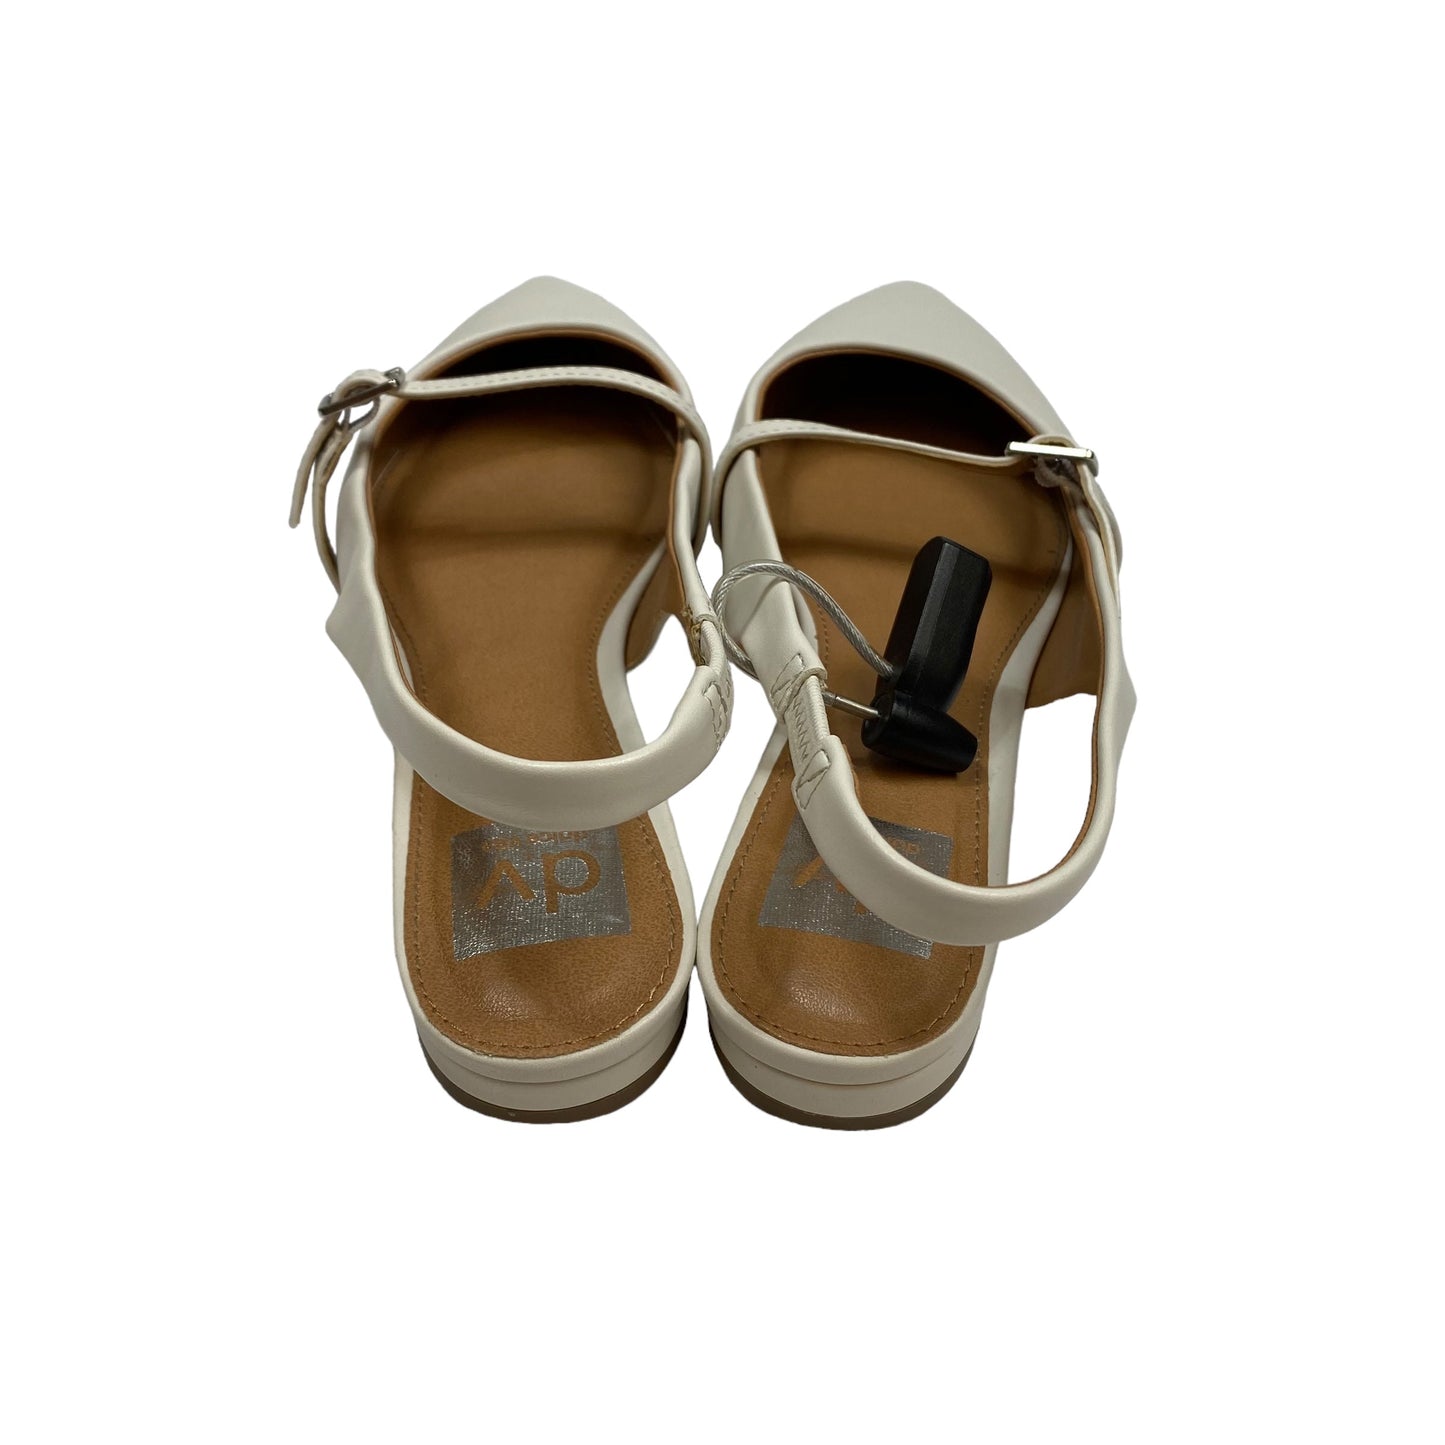 White Shoes Flats Dolce Vita, Size 8.5